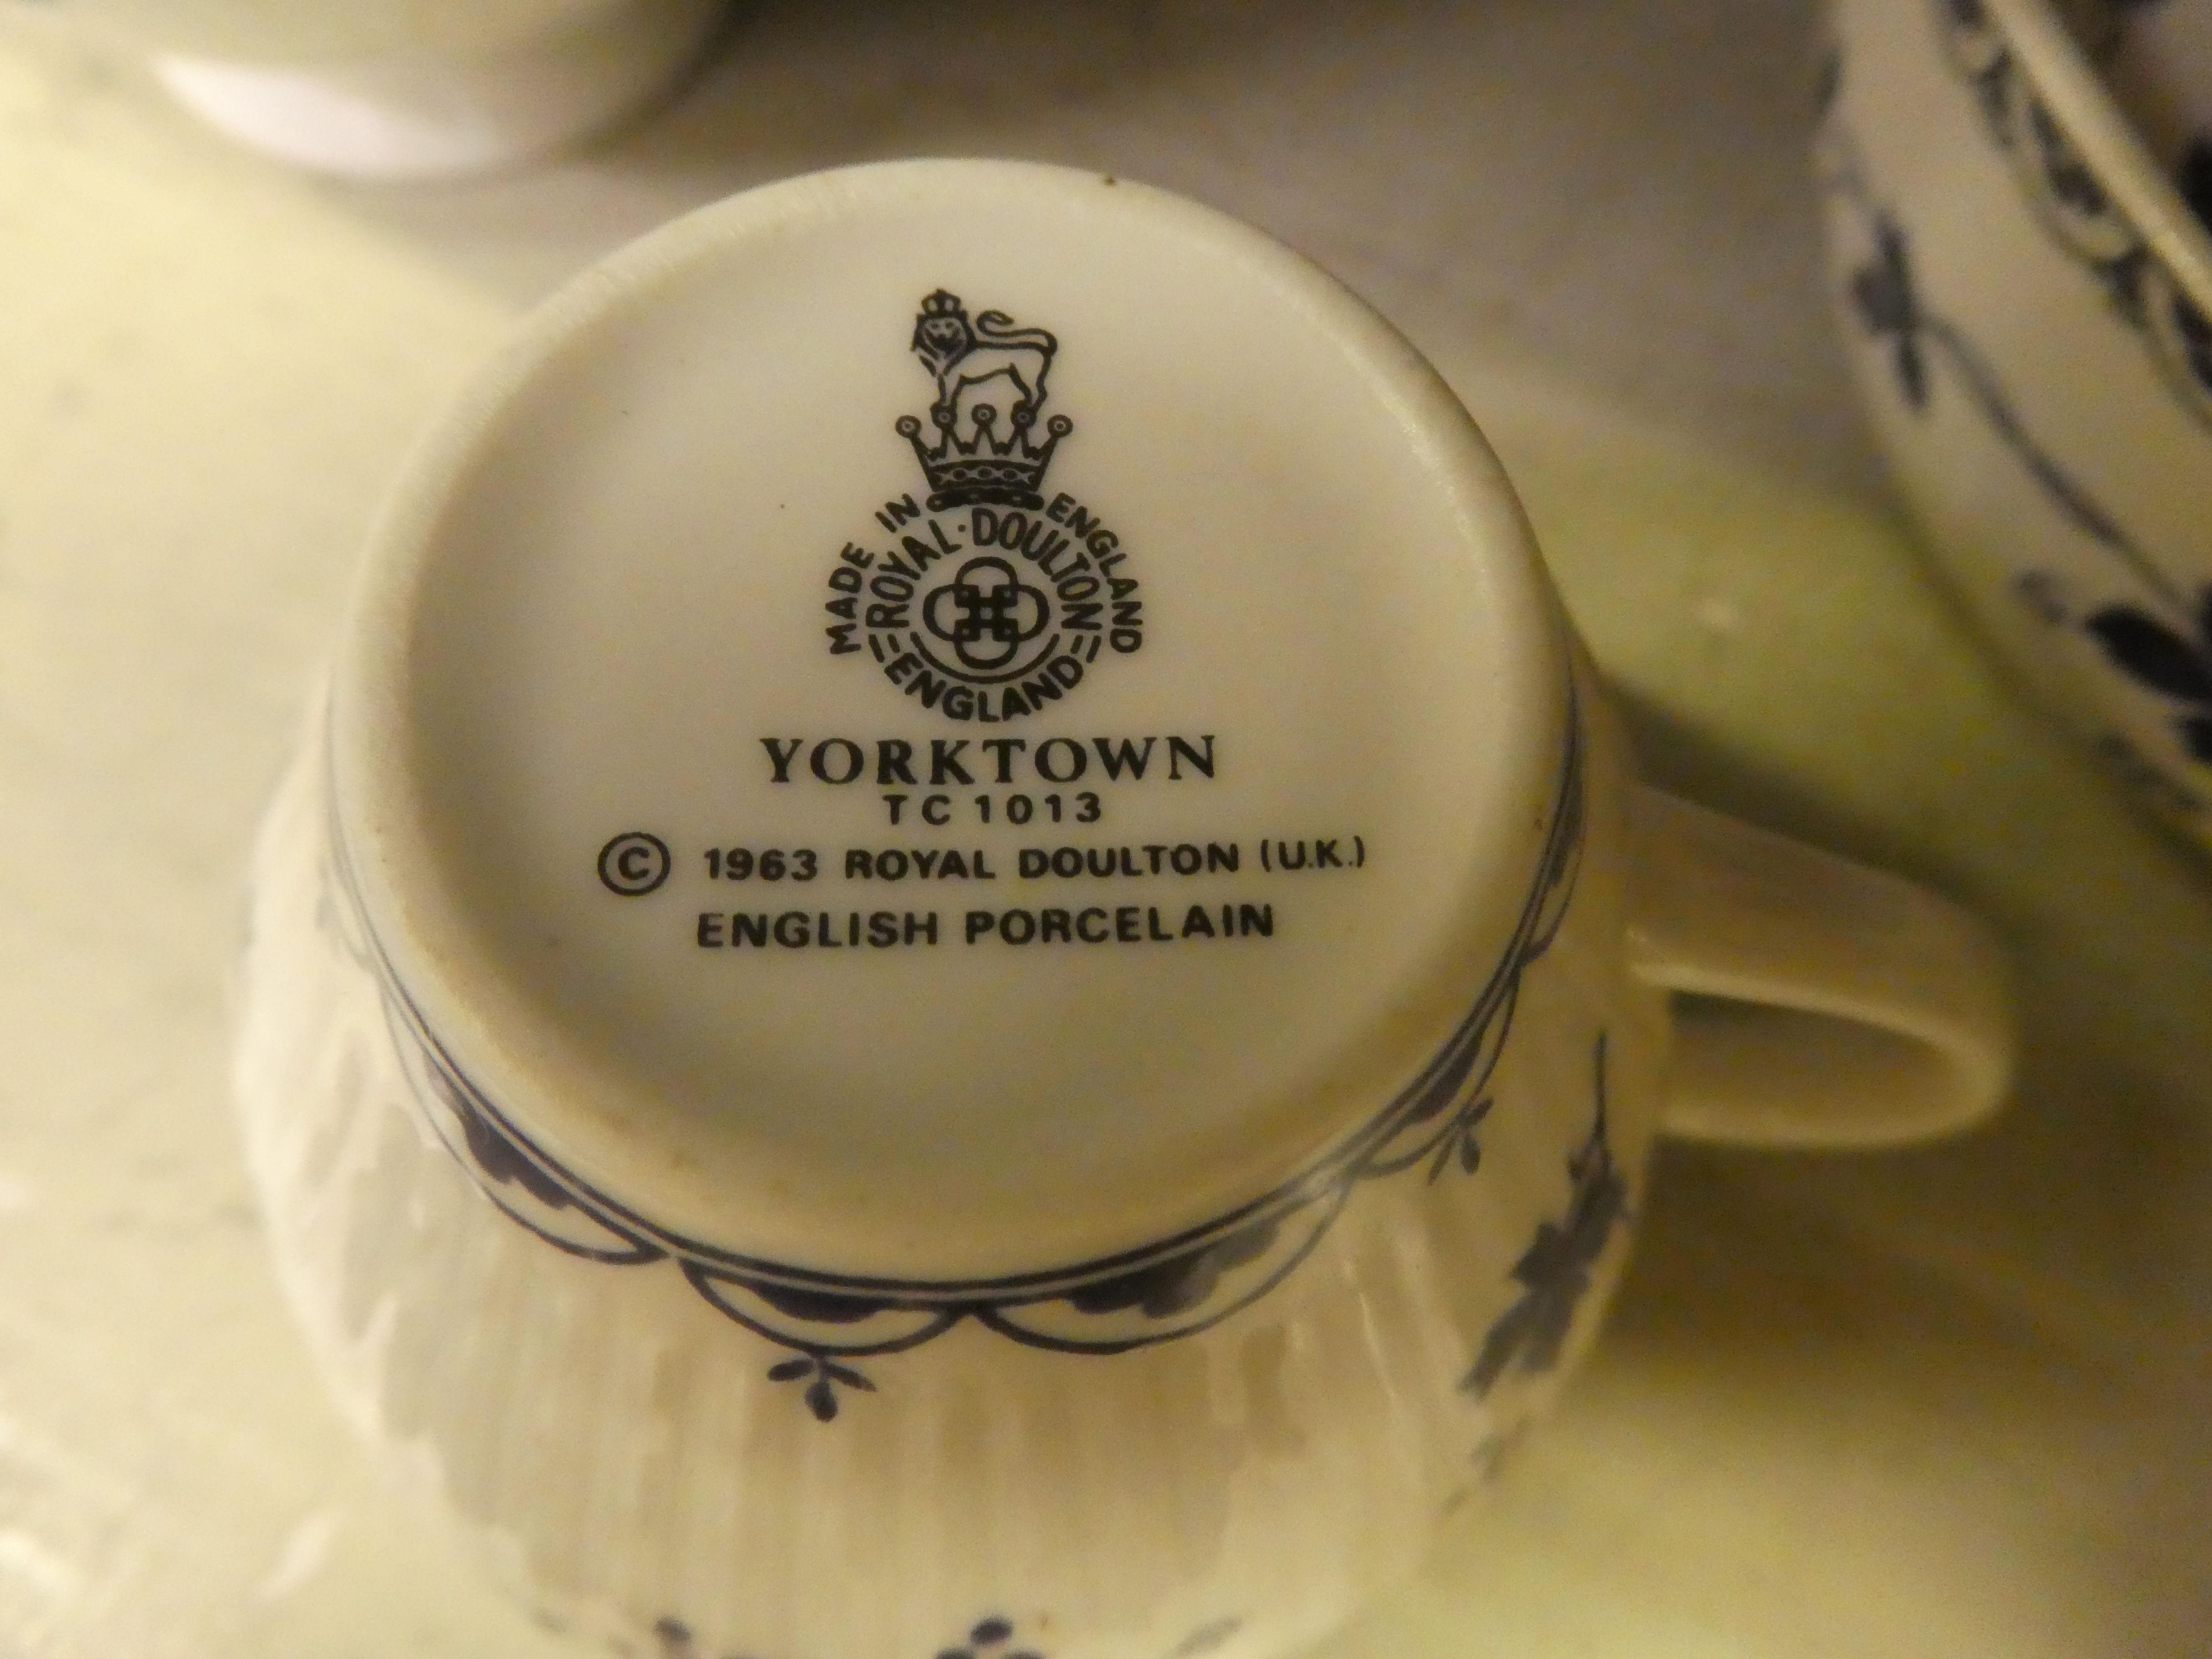 Royal Doulton translucent china Yorktown pattern tableware - Image 5 of 5